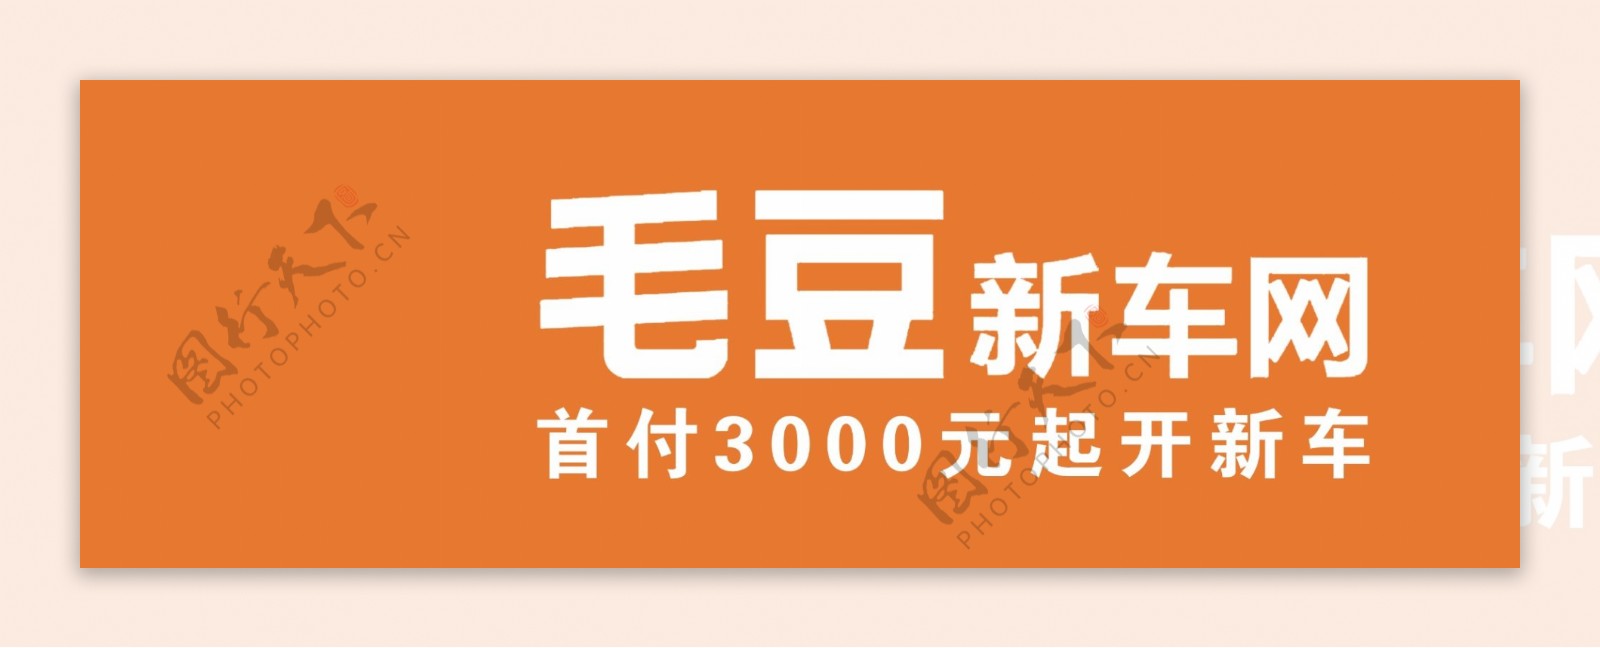 毛豆logo